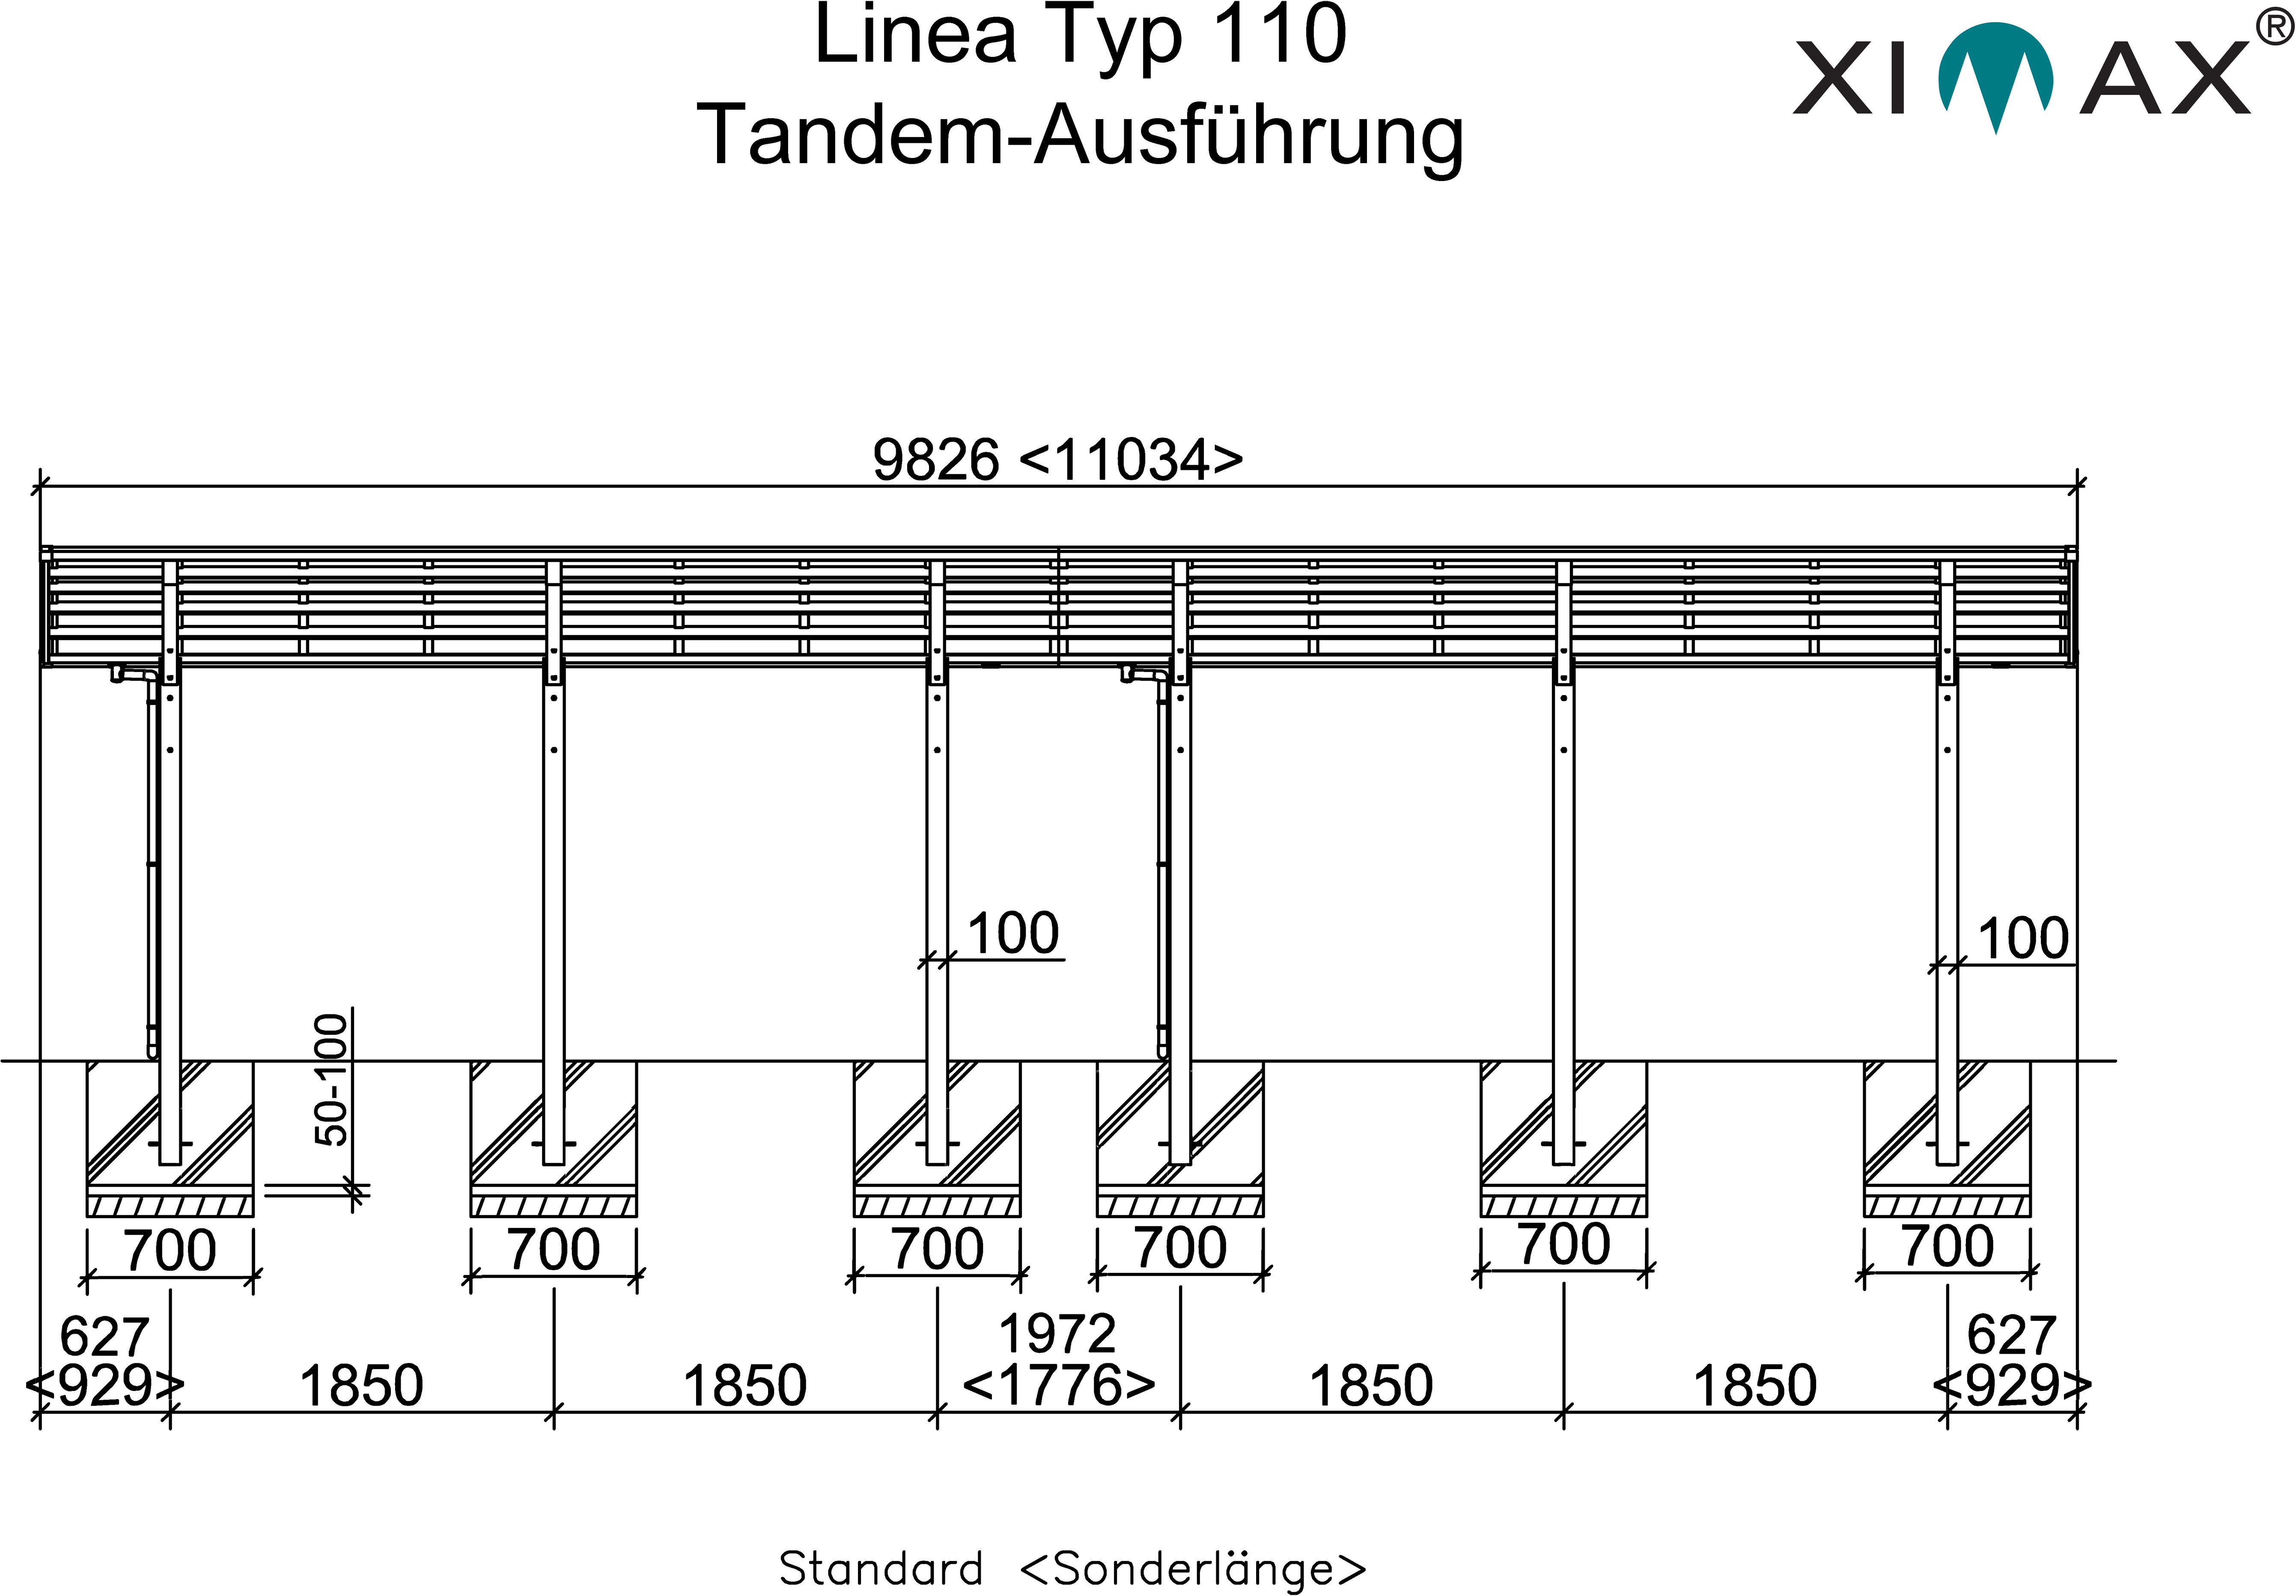 Ximax Alu Doppelcarport Linea Tandem Typ 110 Bronze 273 x 983 cm  Sonderfertigung kaufen bei OBI